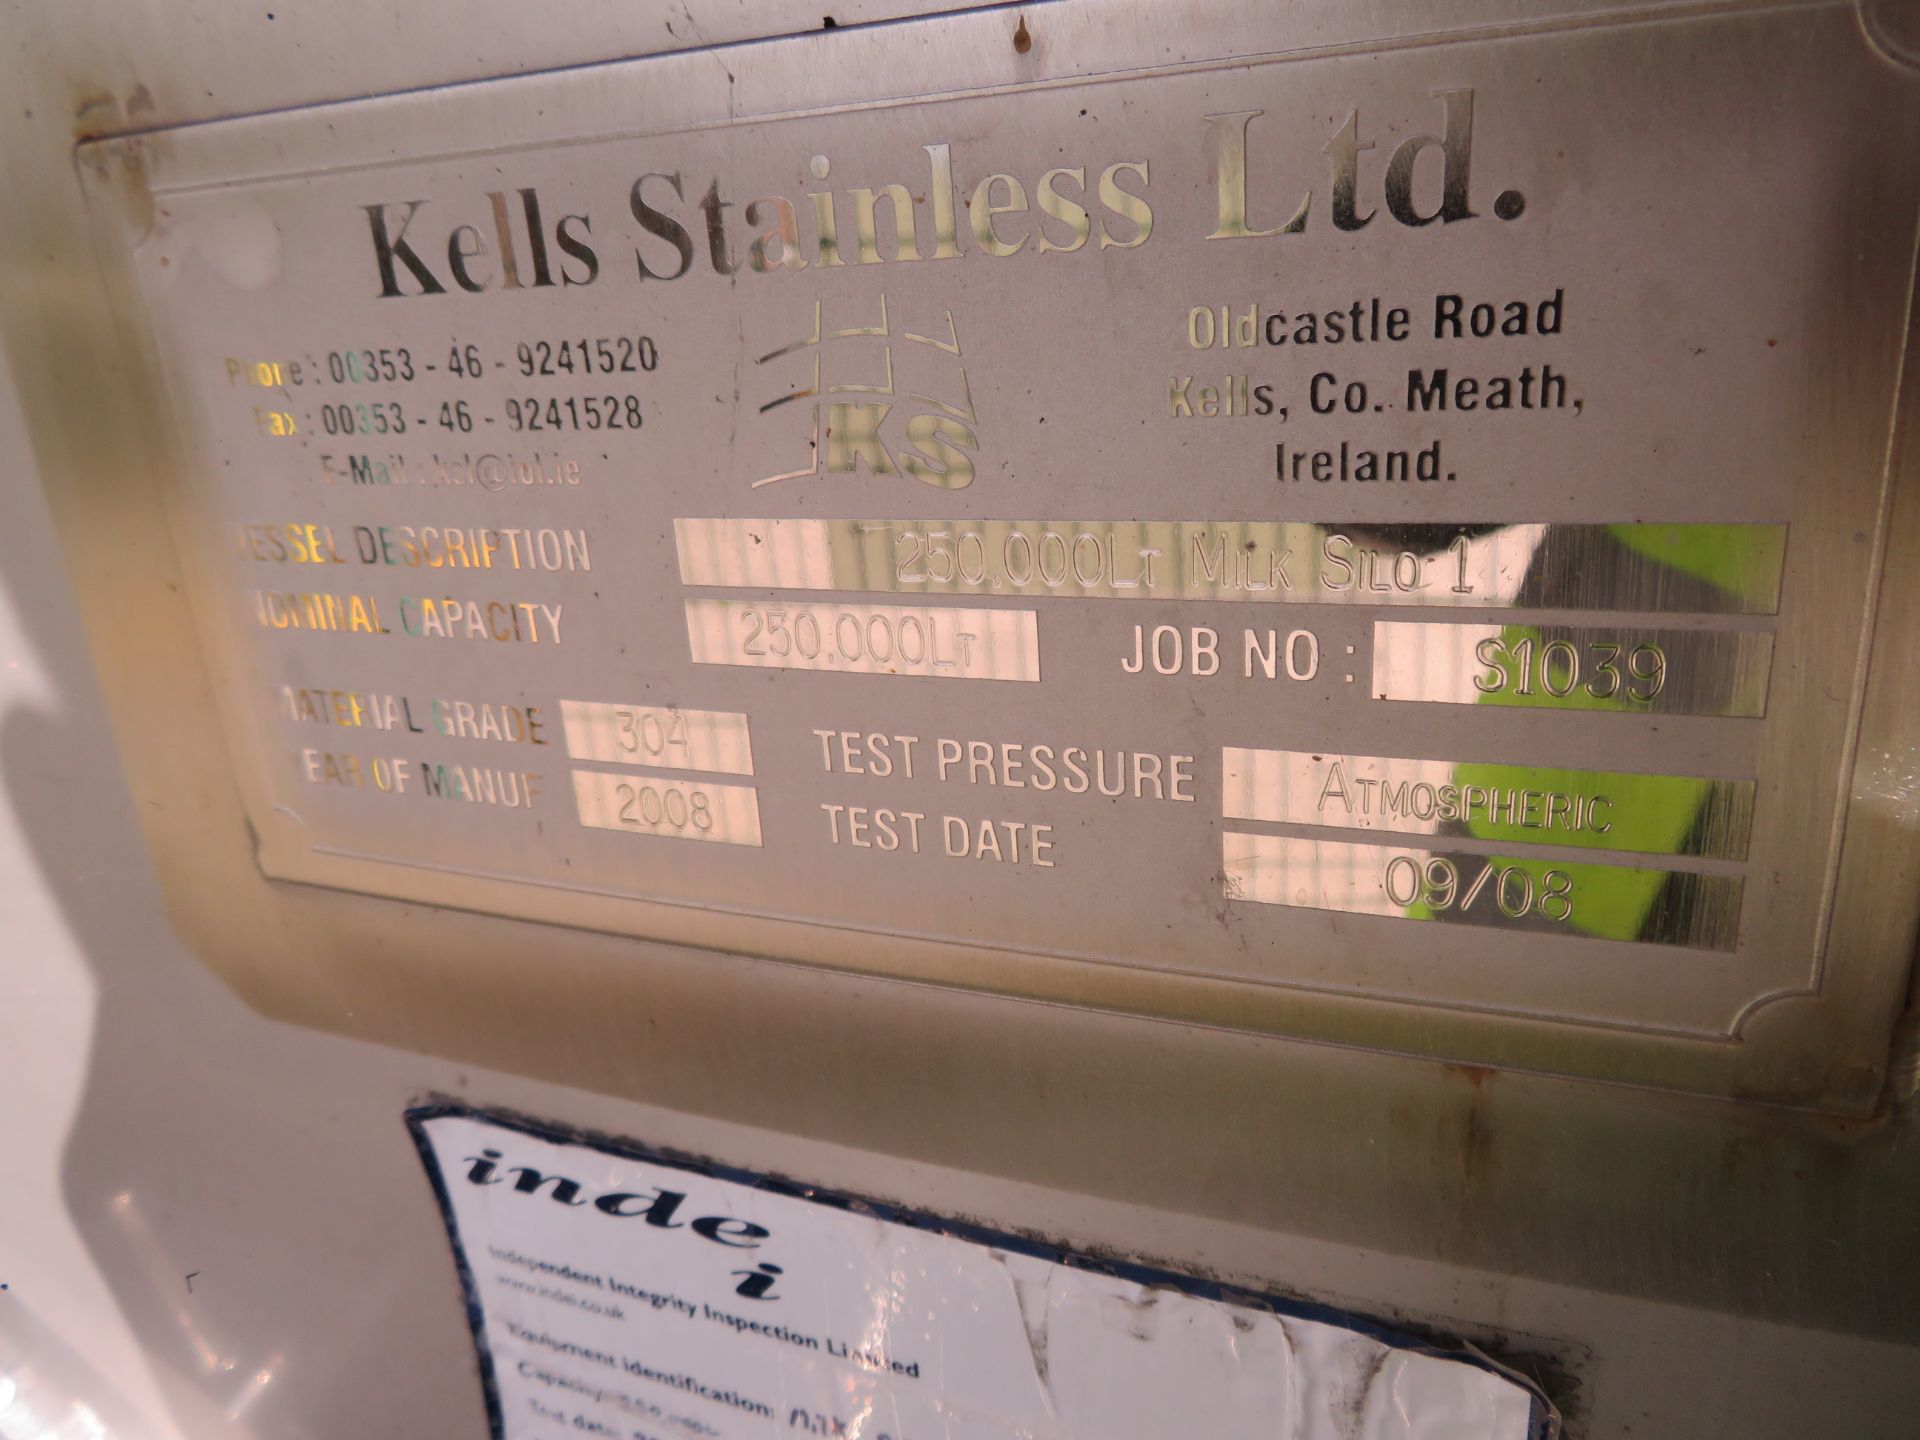 Kells Stainless Ltd 250,000 ltr SS Milk Silo No 1. - Image 3 of 6